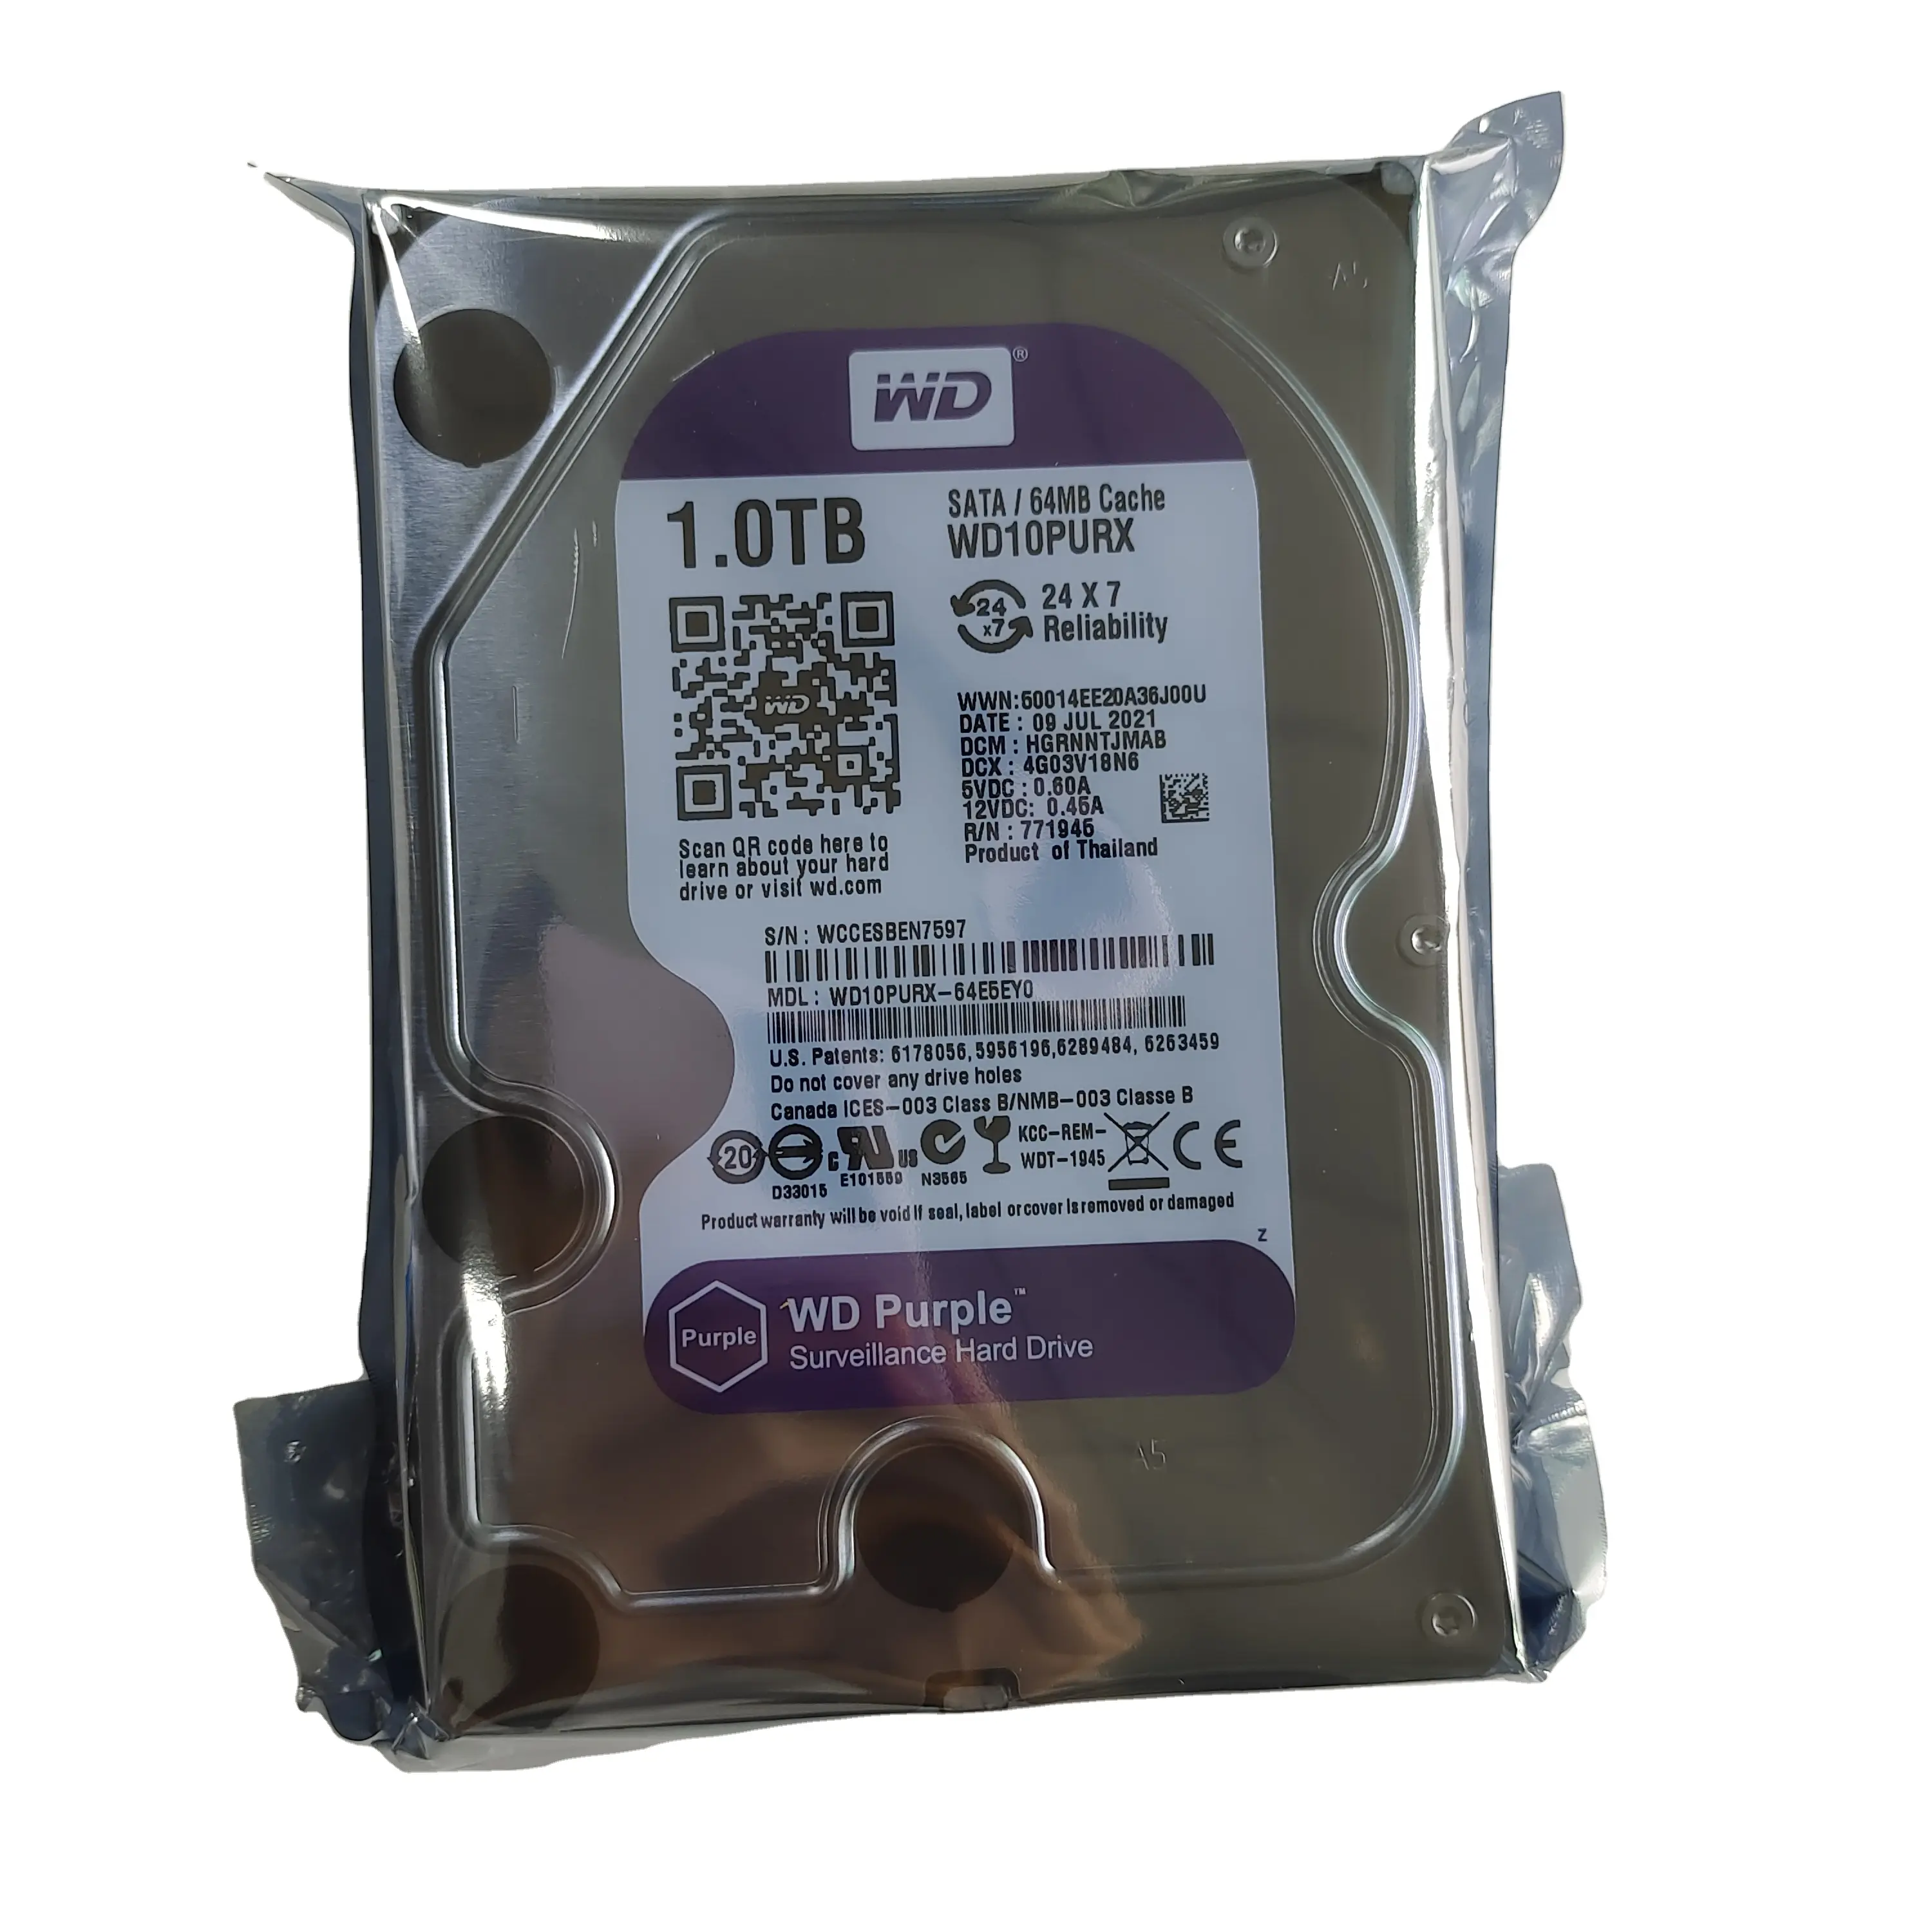 Hard Disk Drive Purple Hdd Disco Rigido sistemi di sicurezza Festplatte Dvr Nvr Wd10purx 1tb 3.5 pollici Sata 5400 Rpm dischi rigidi da 1tb